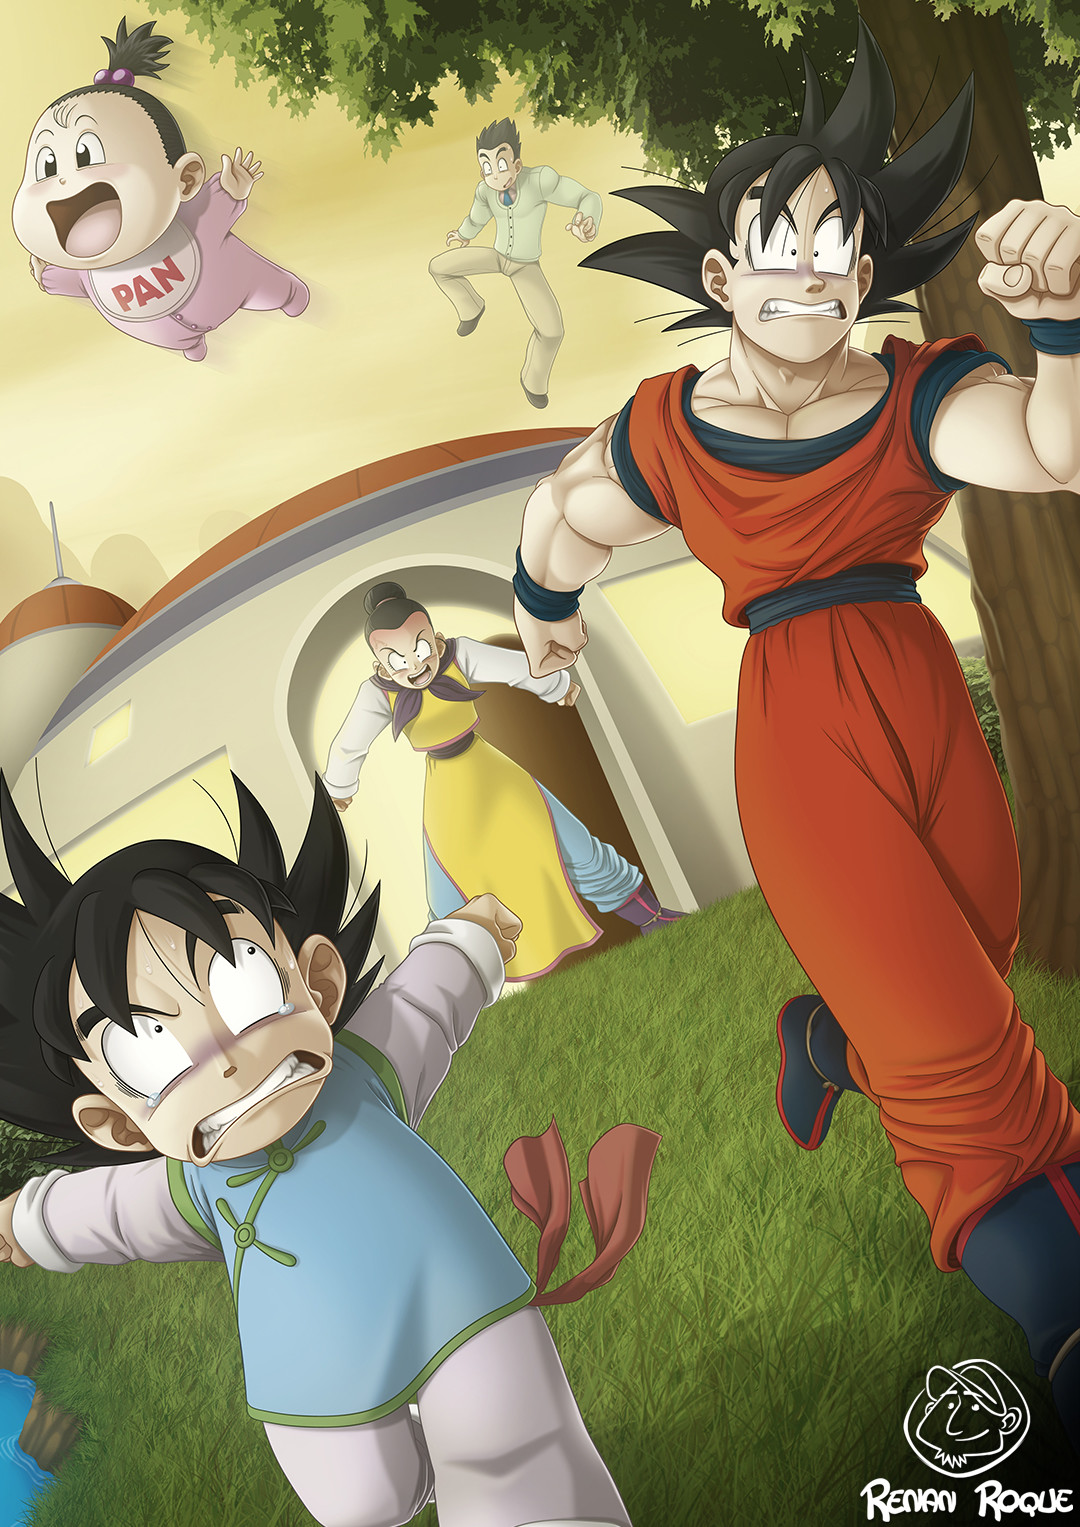 Goku vs seus filhos #dbz #dragonball #anime #combate #goku #vegeta